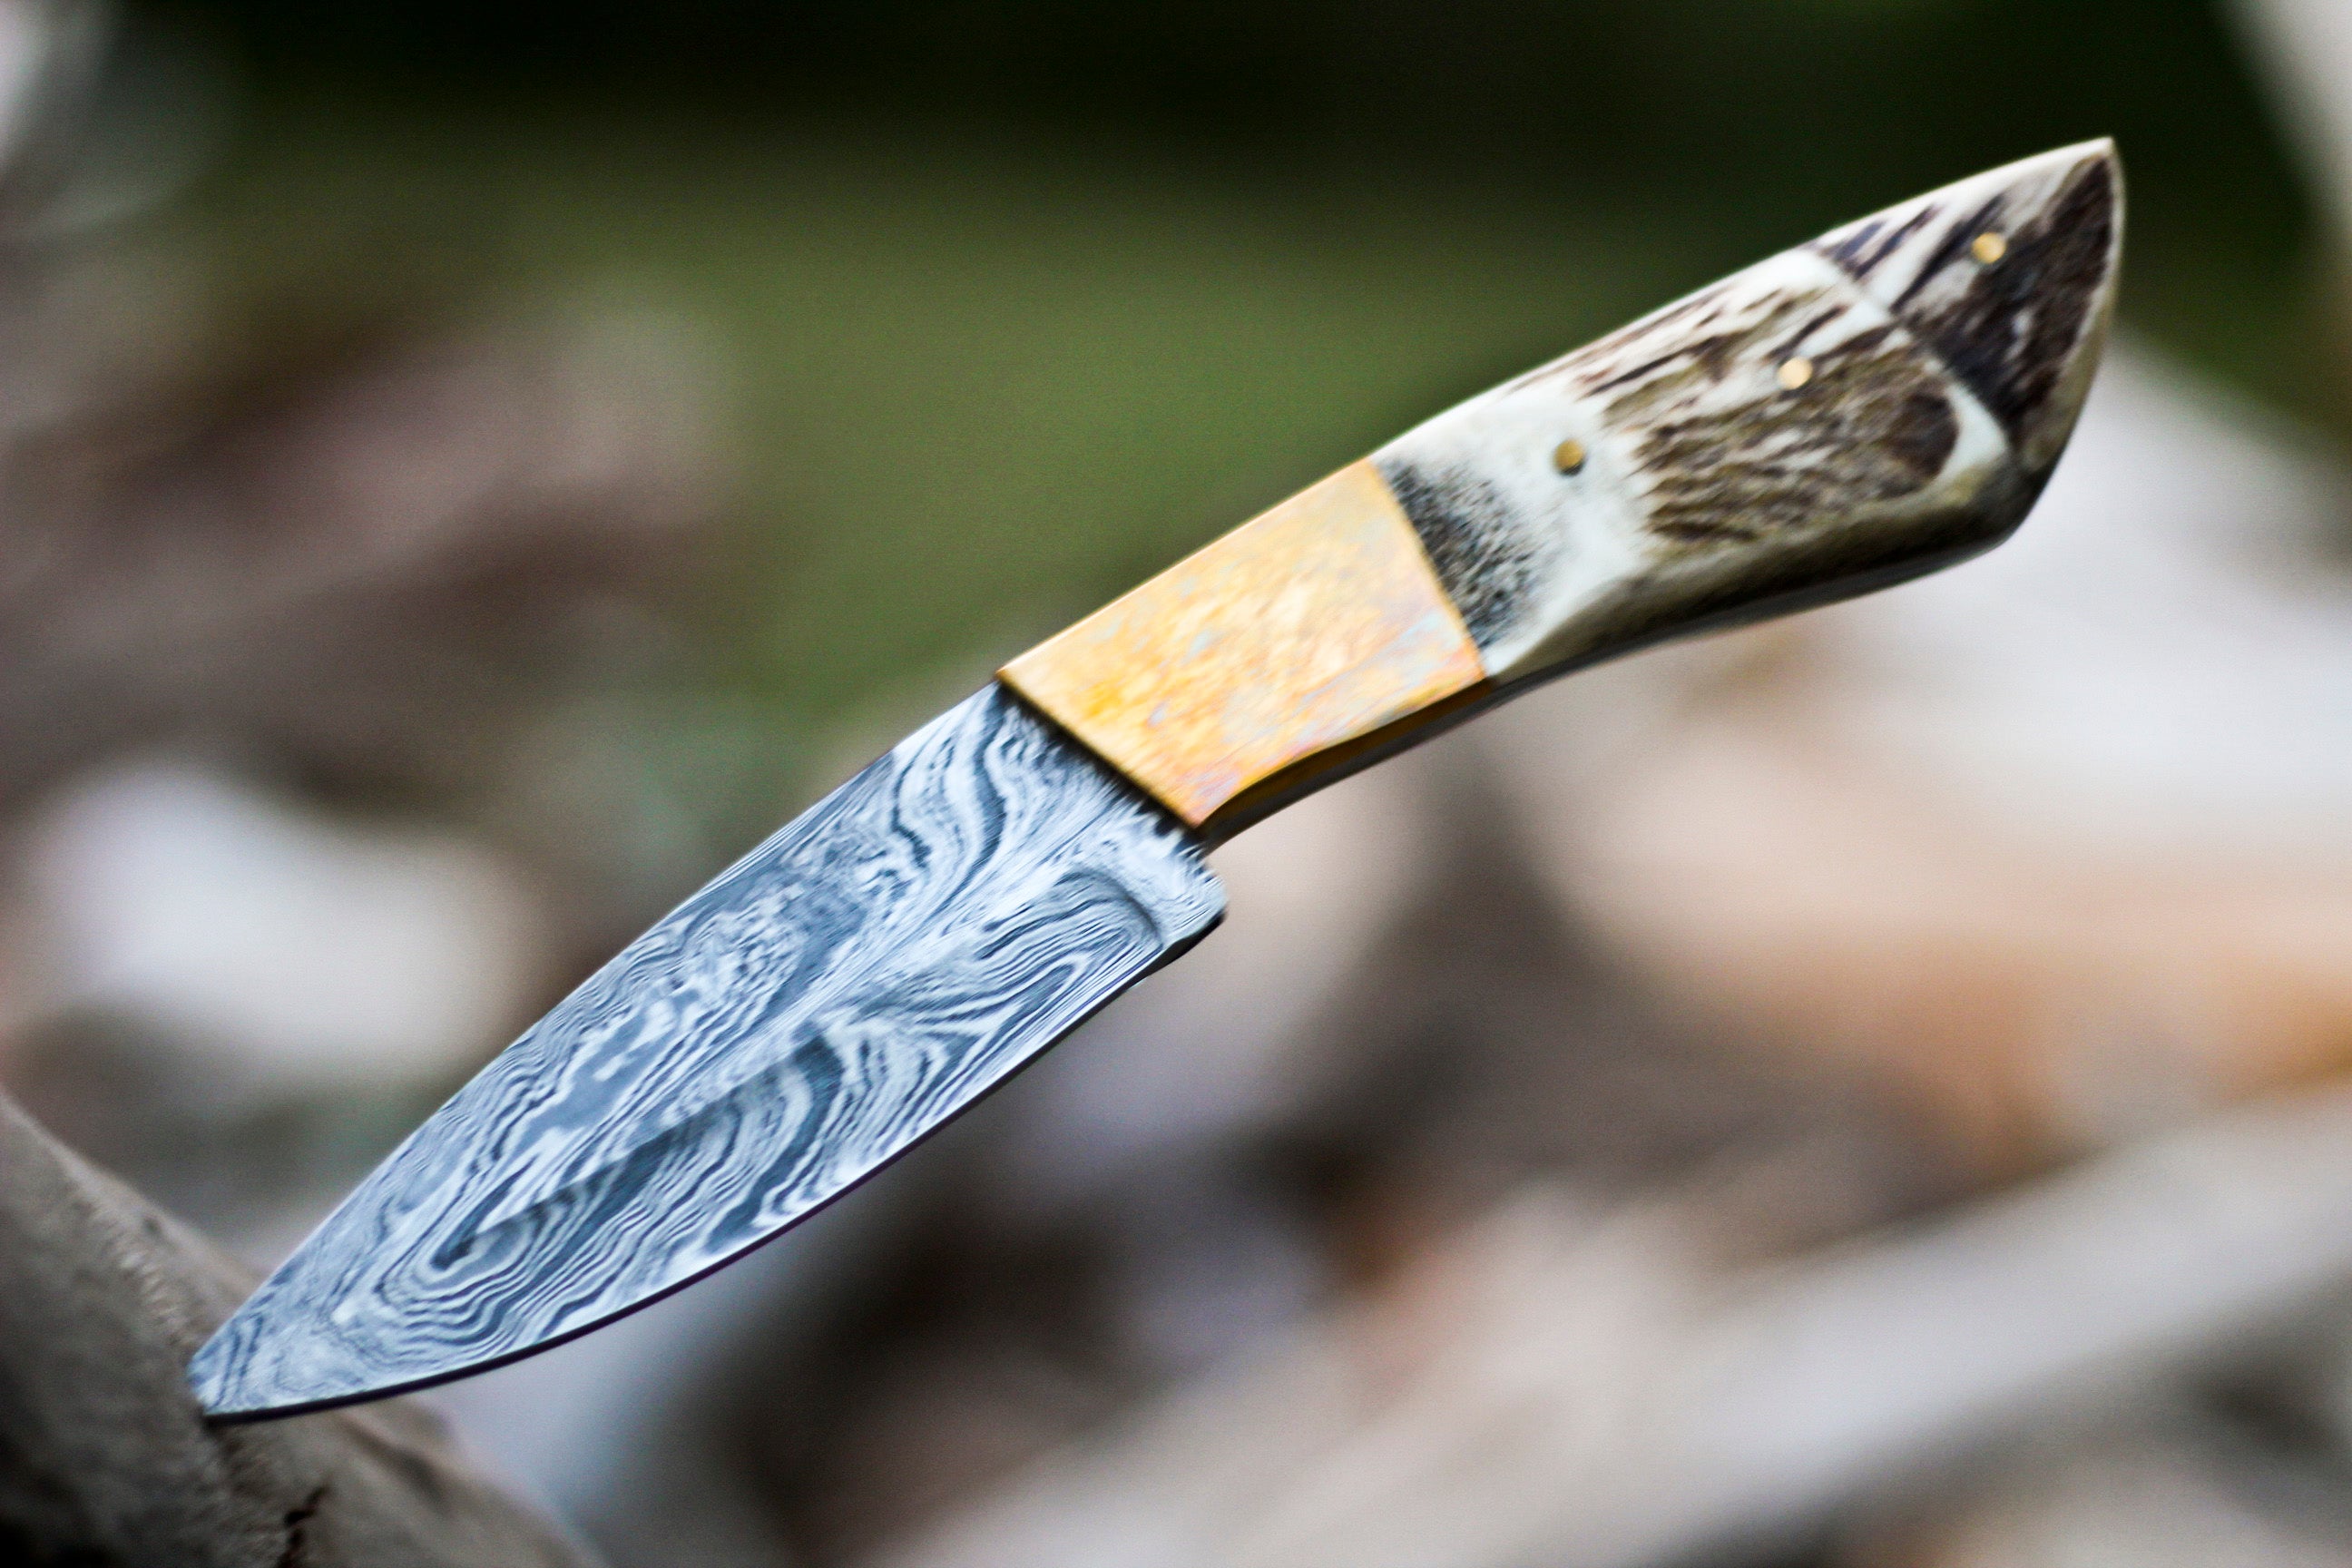 <h3>Handmade Forged Damascus Steel Hunting Skinner Knife EDC 9” V3 With Stag Antler _ Engraved Camel Bone Handle</h3>